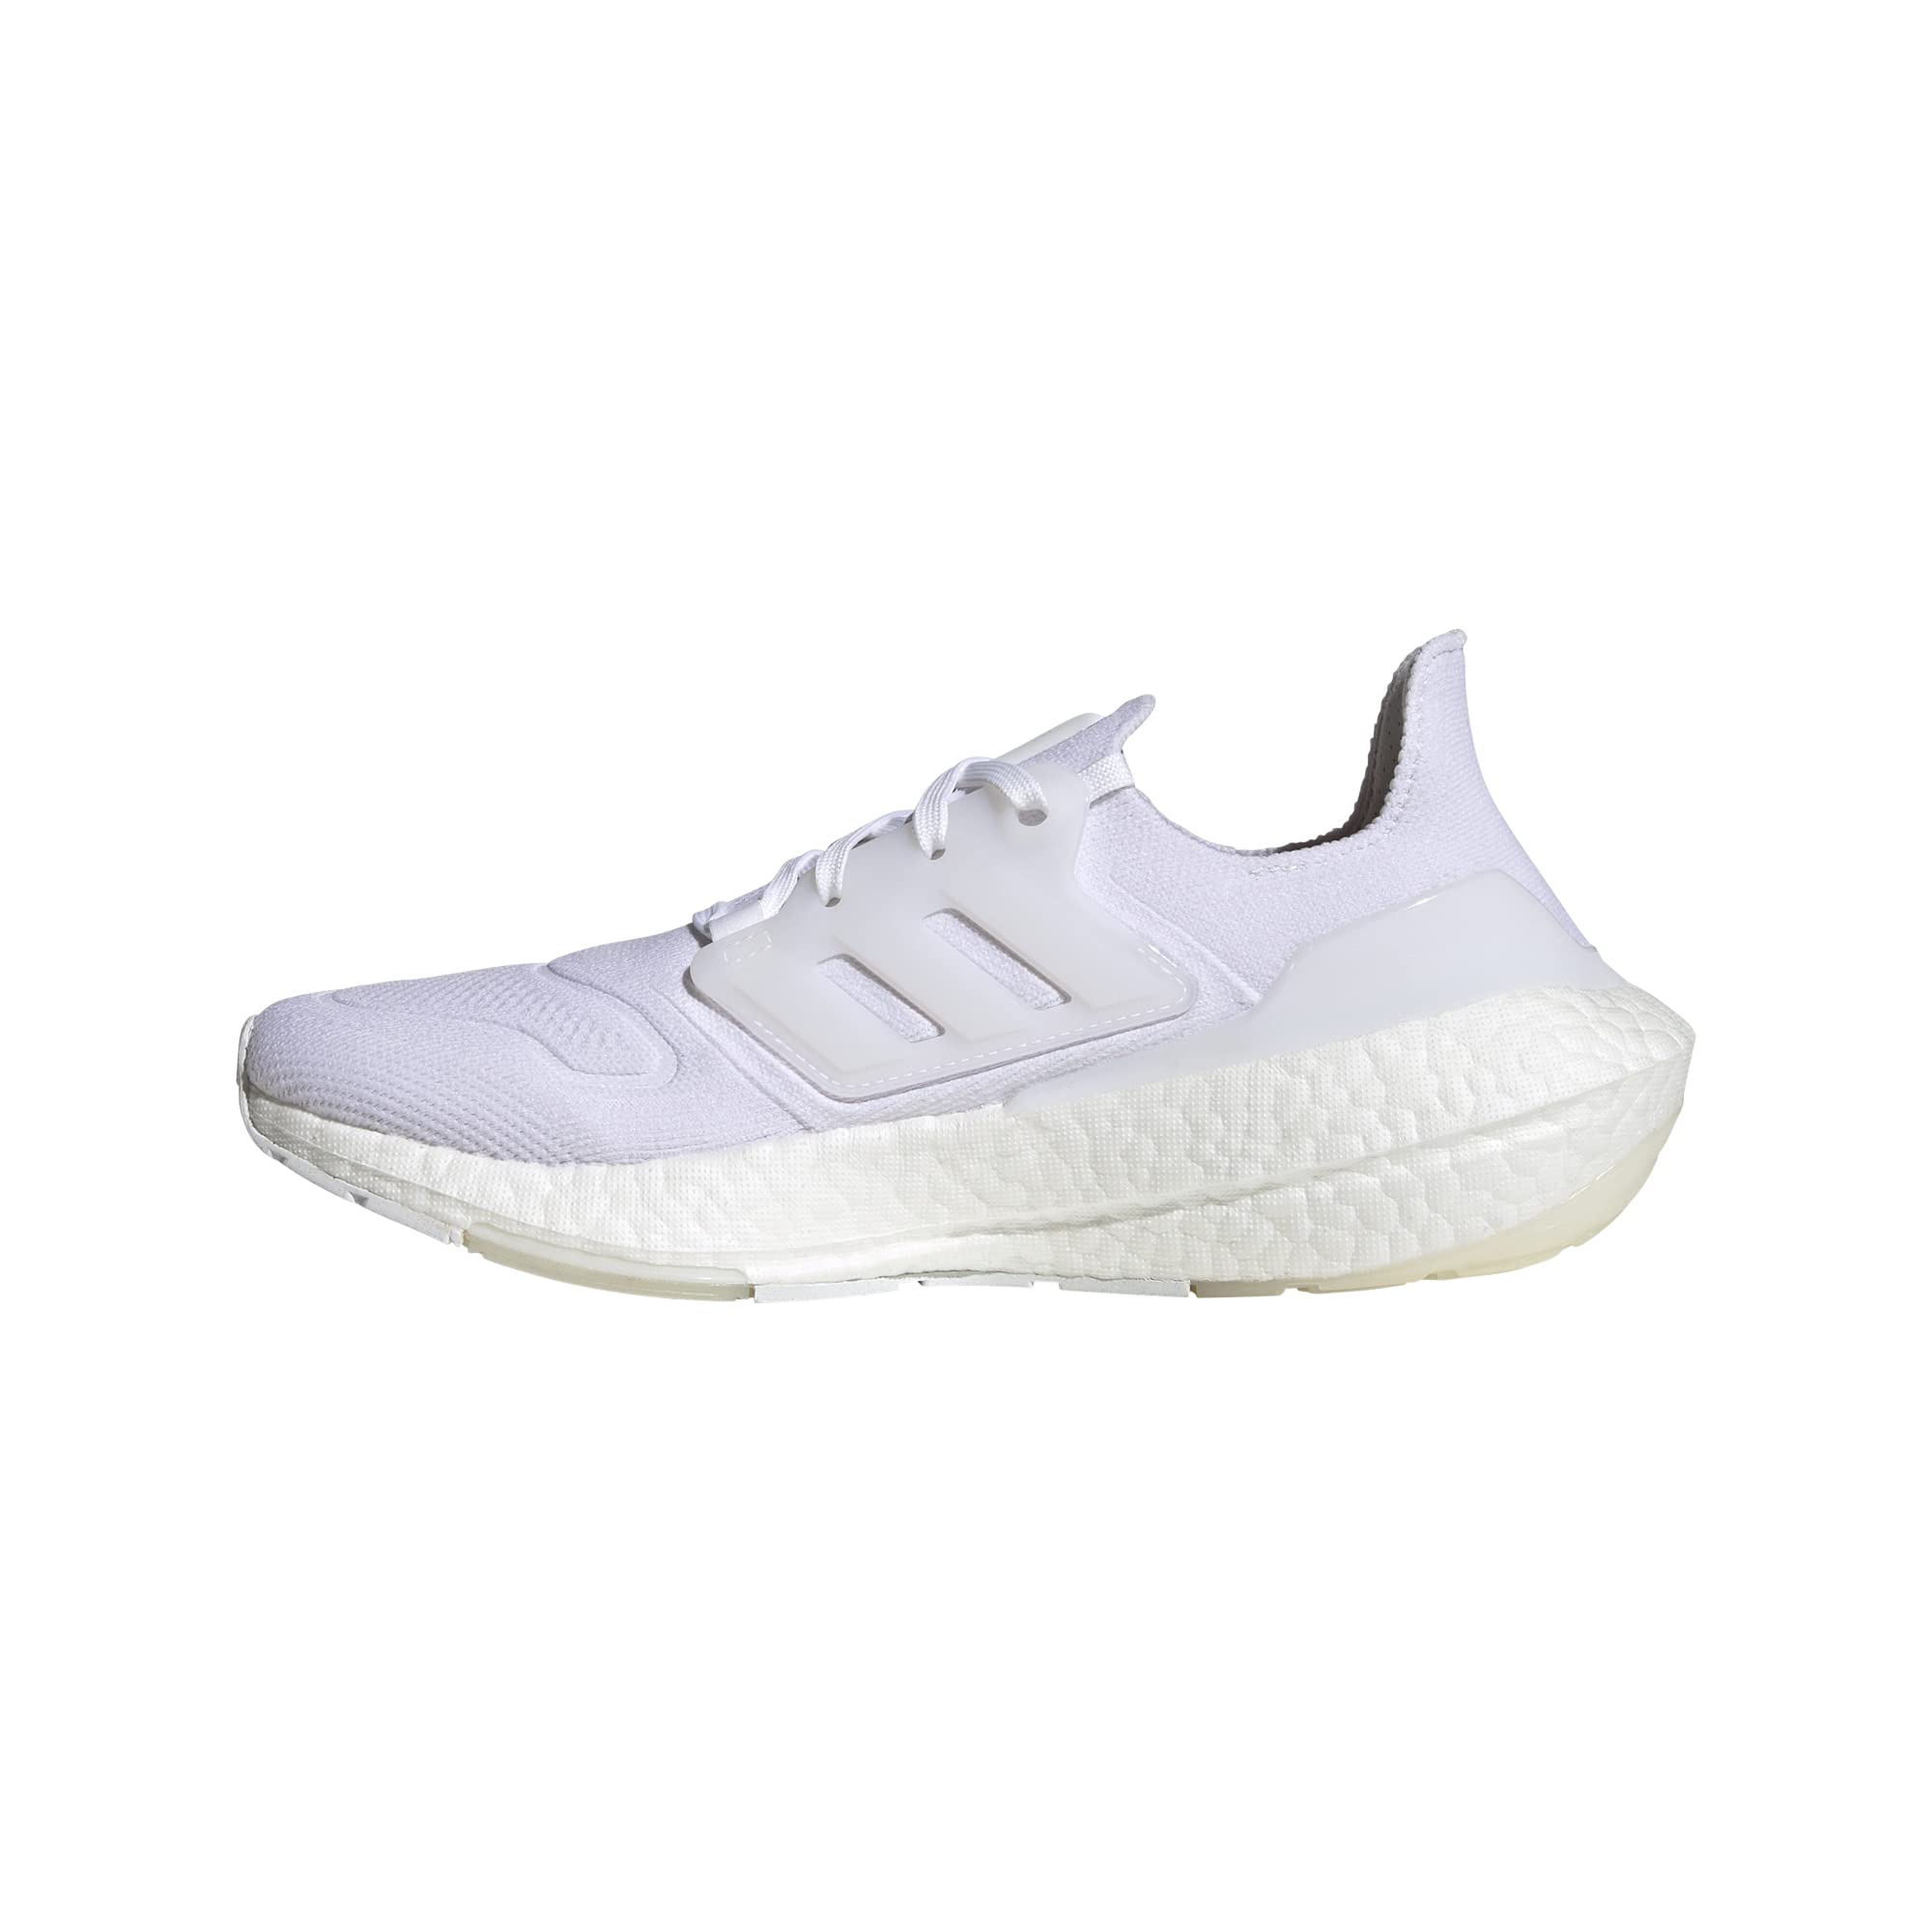 adidas Women's Ultraboost 22 Running Shoe - $70 at Amazon